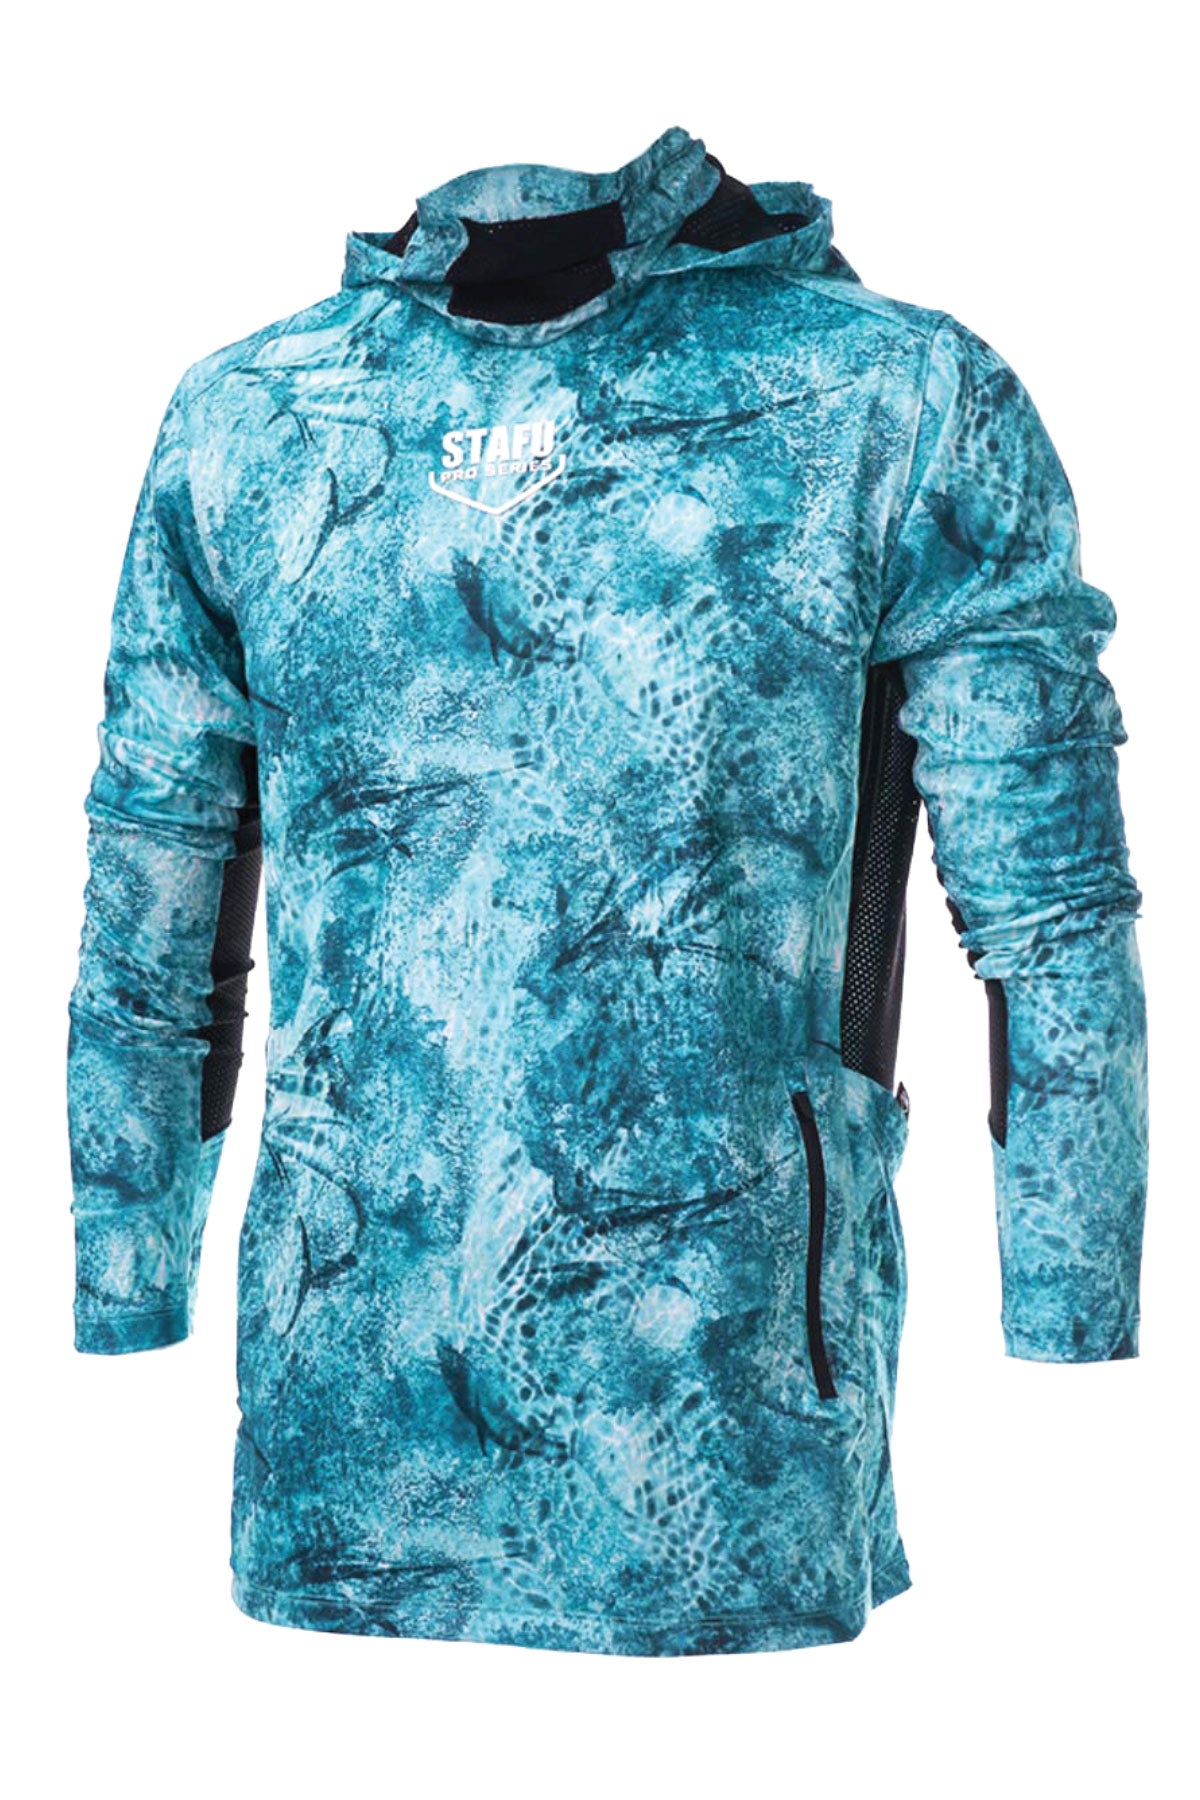 Argonaut Hooded Fishing Shirt - Marlin Mania - Blue - Stafu Pro Series